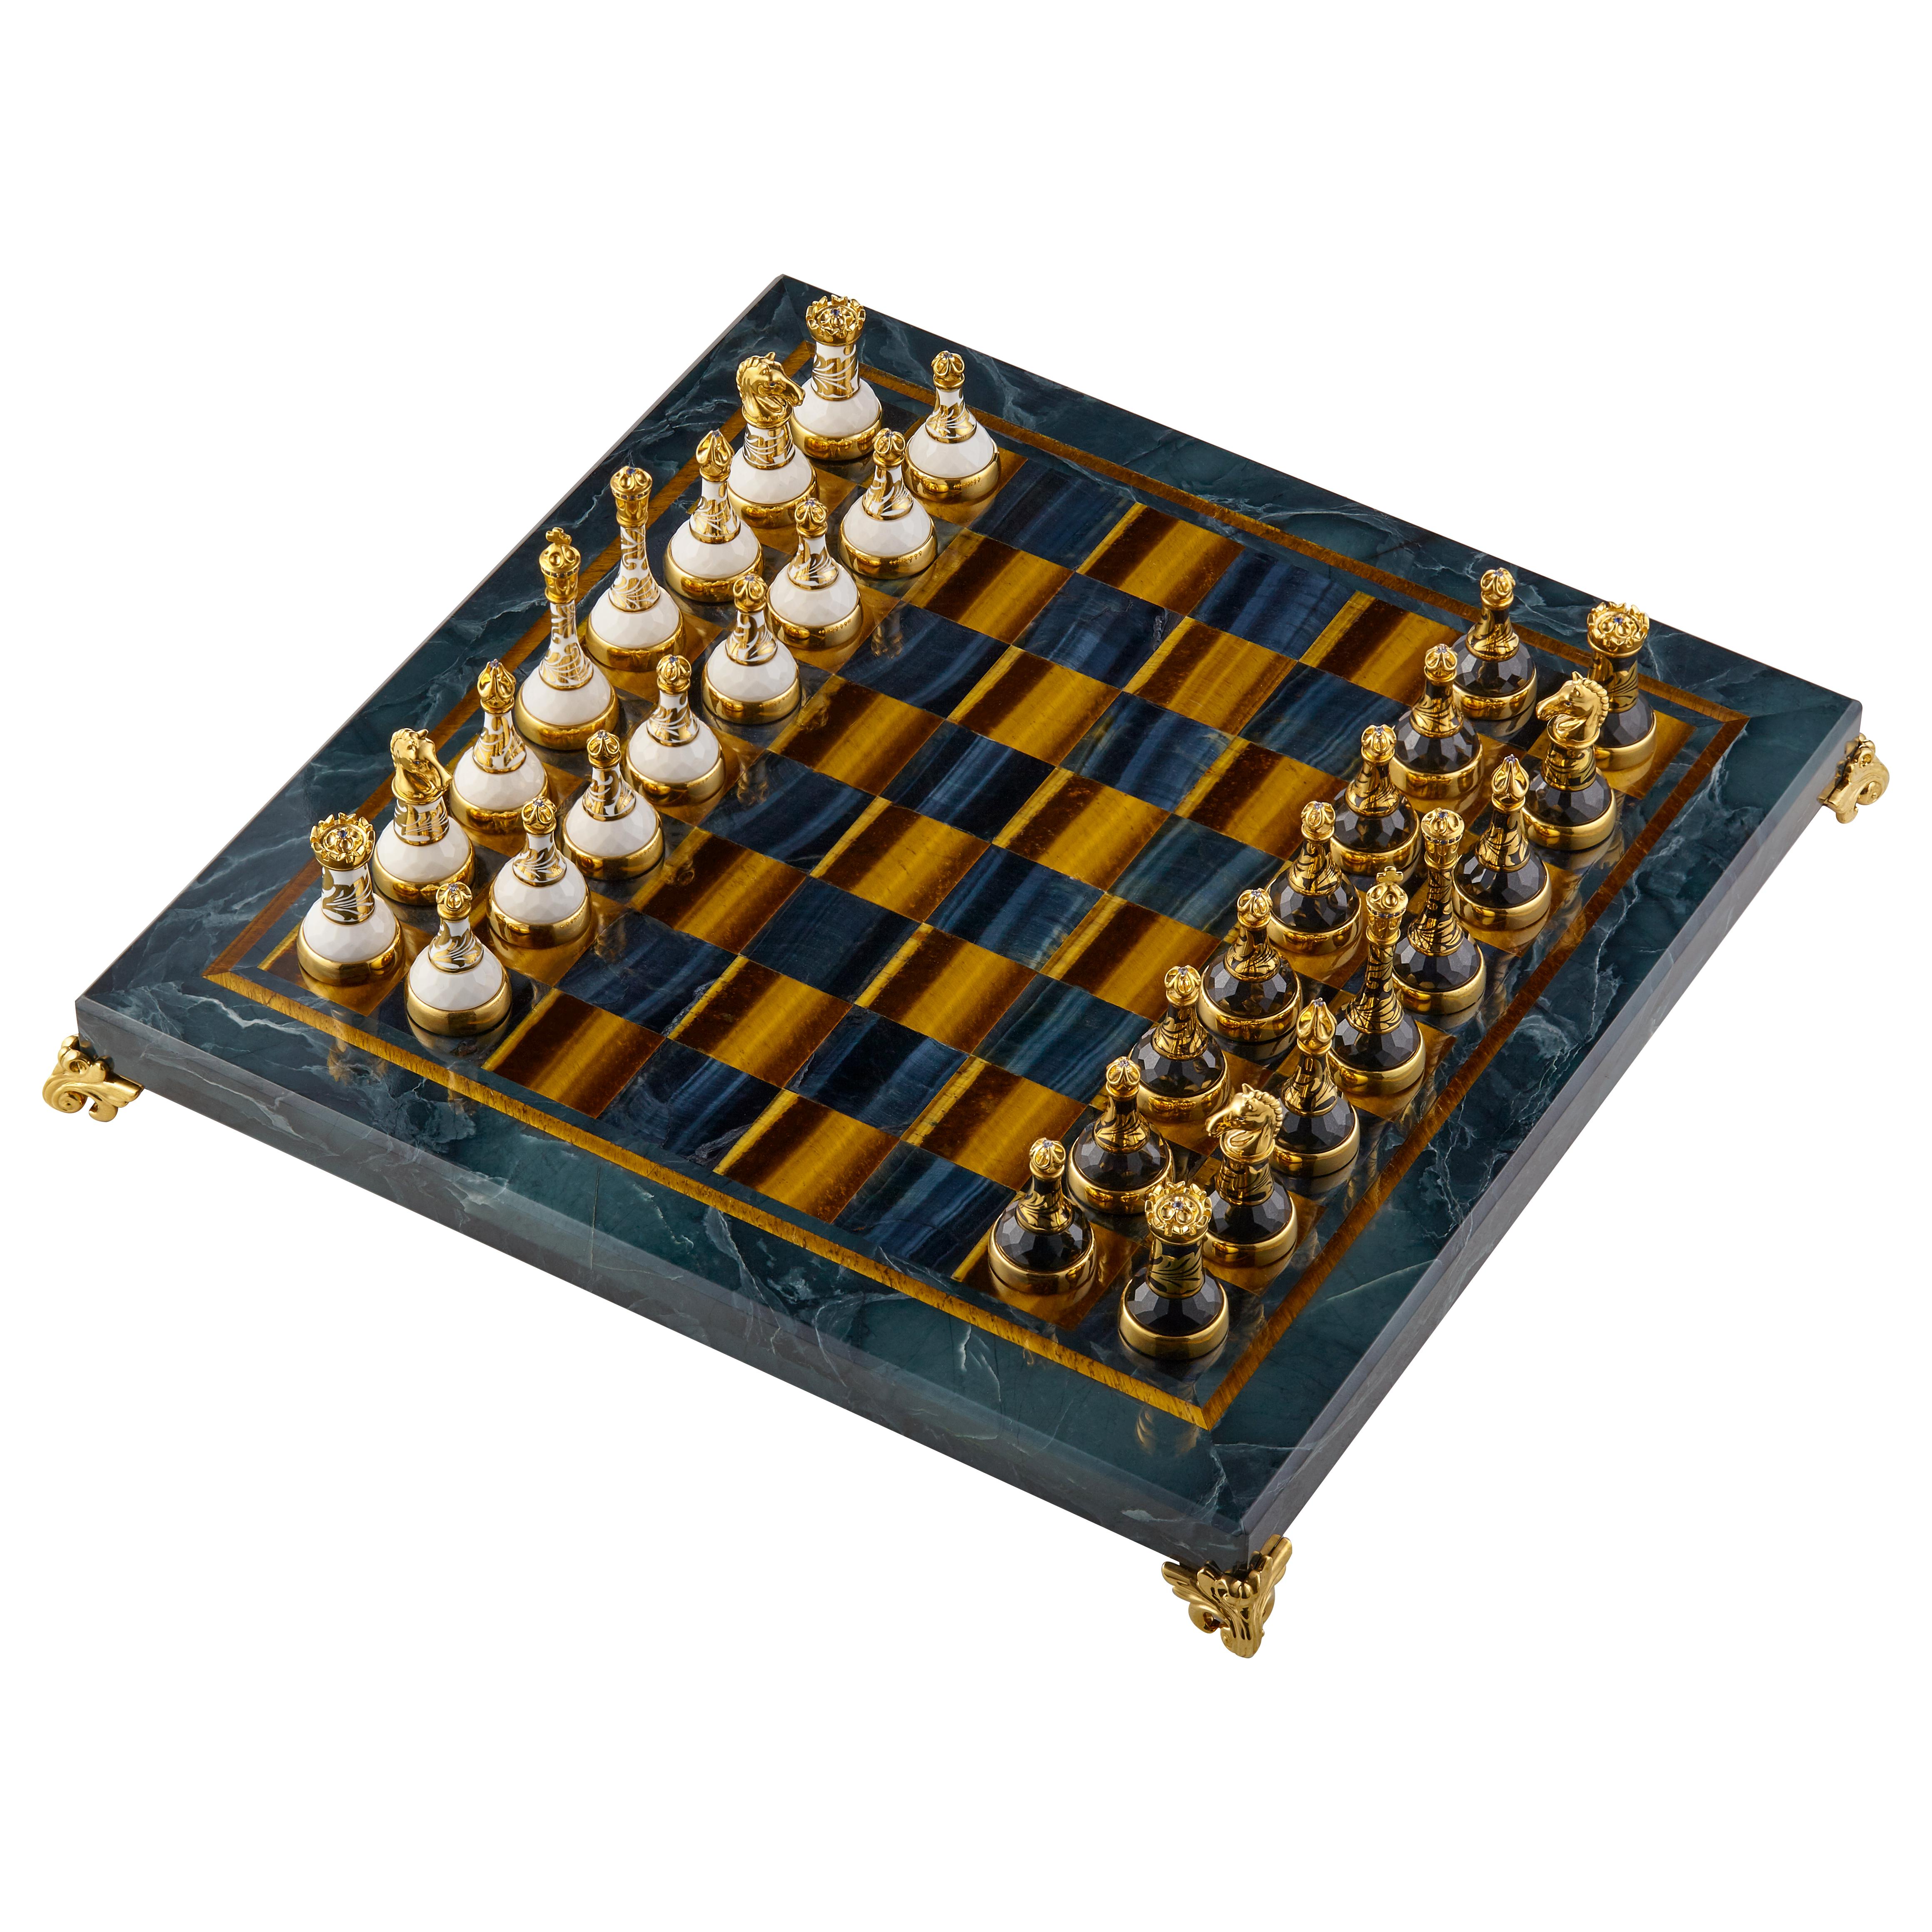 checkers vs chess metaphor